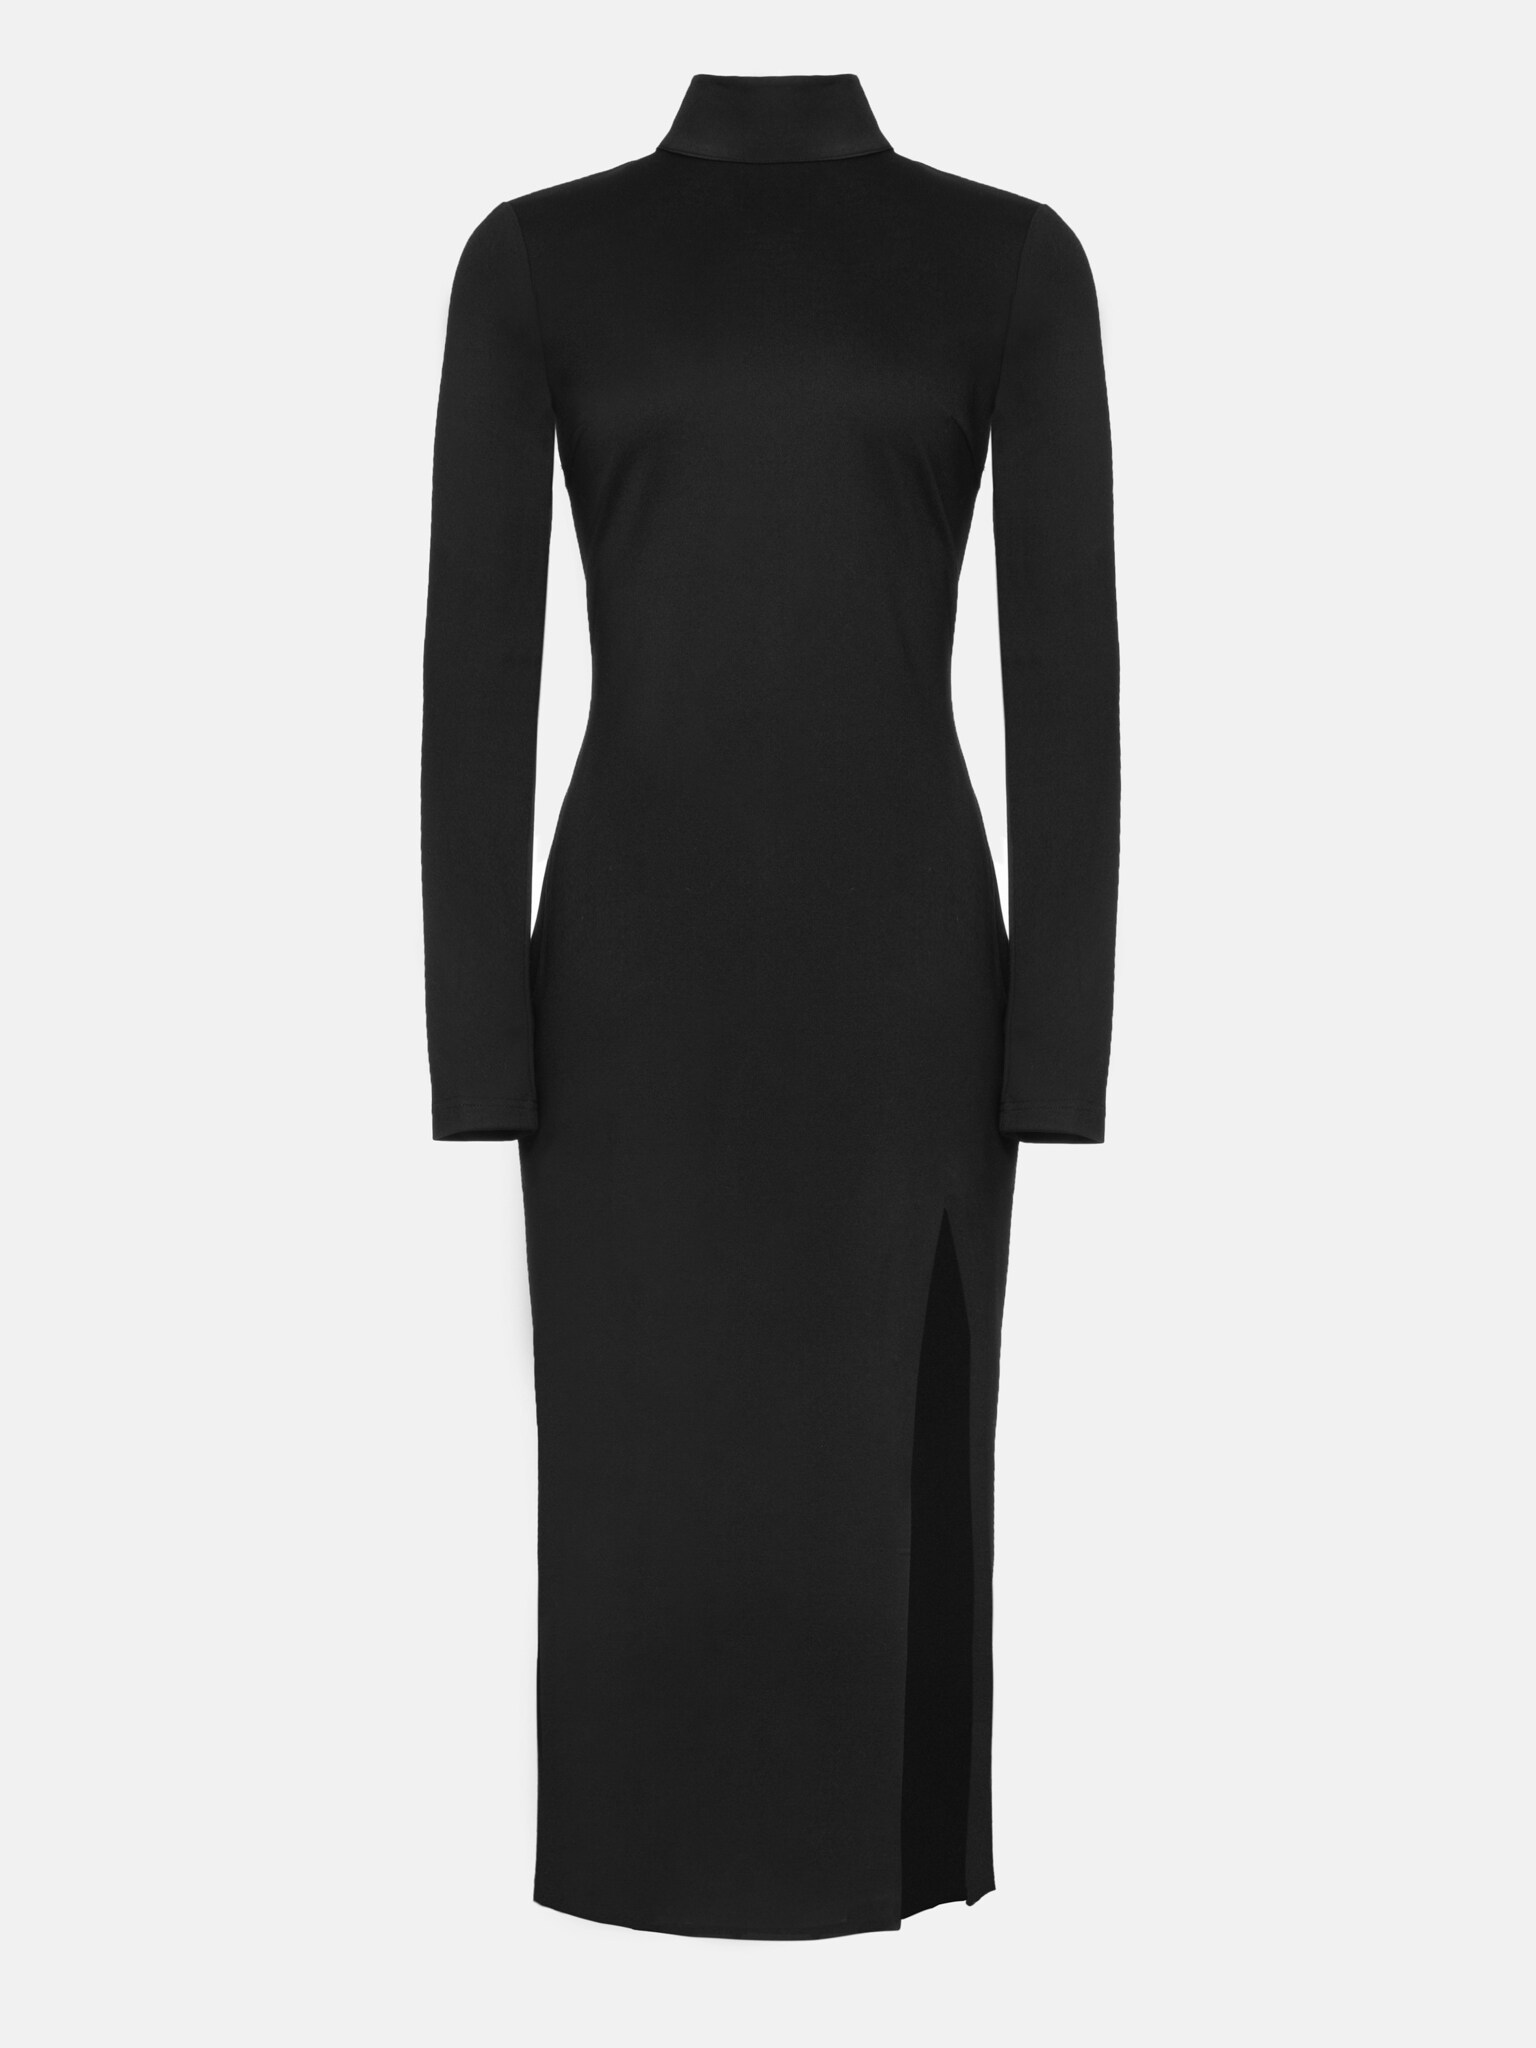 Slim jersey turtleneck midi dress :: LICHI - Online fashion store